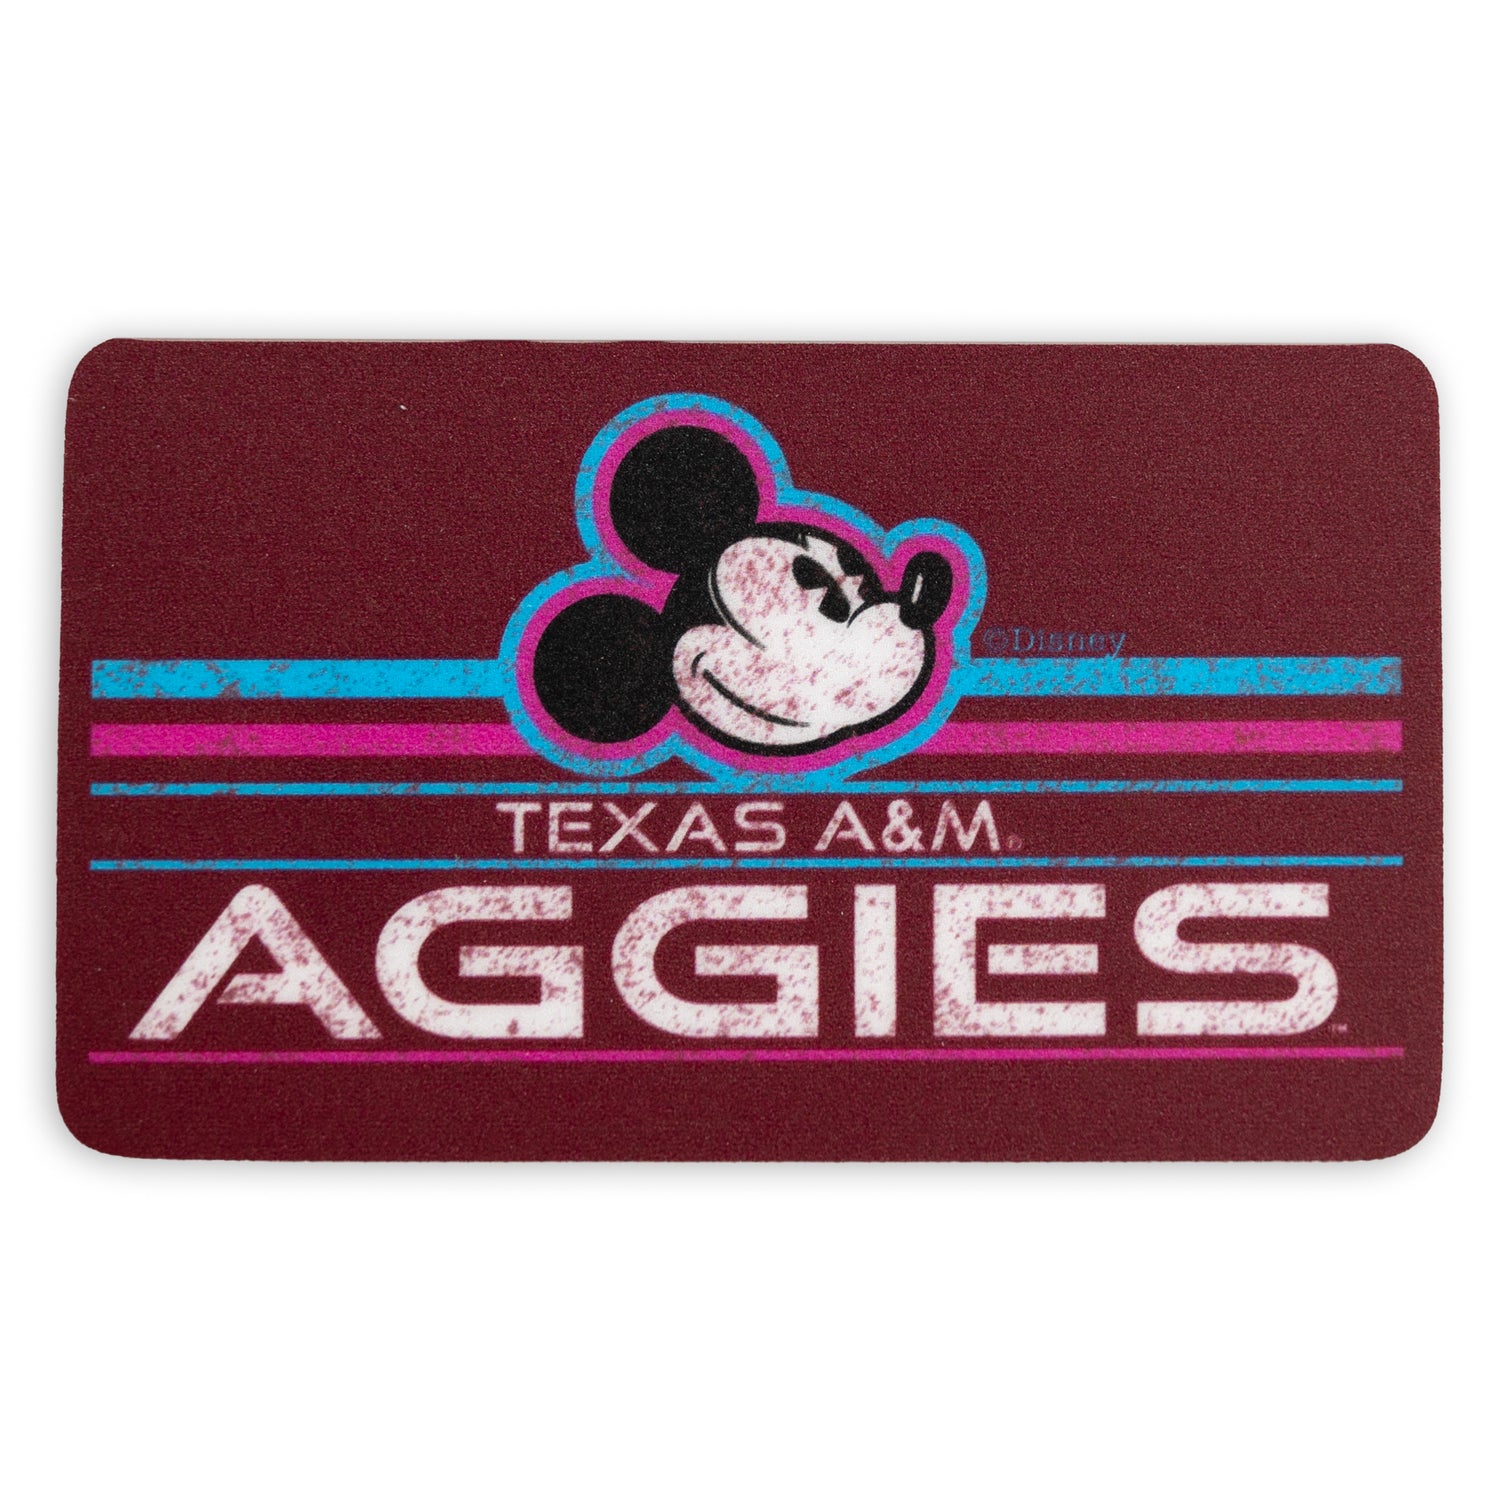 Texas A&M Decimator Mickey Mouse Sticker